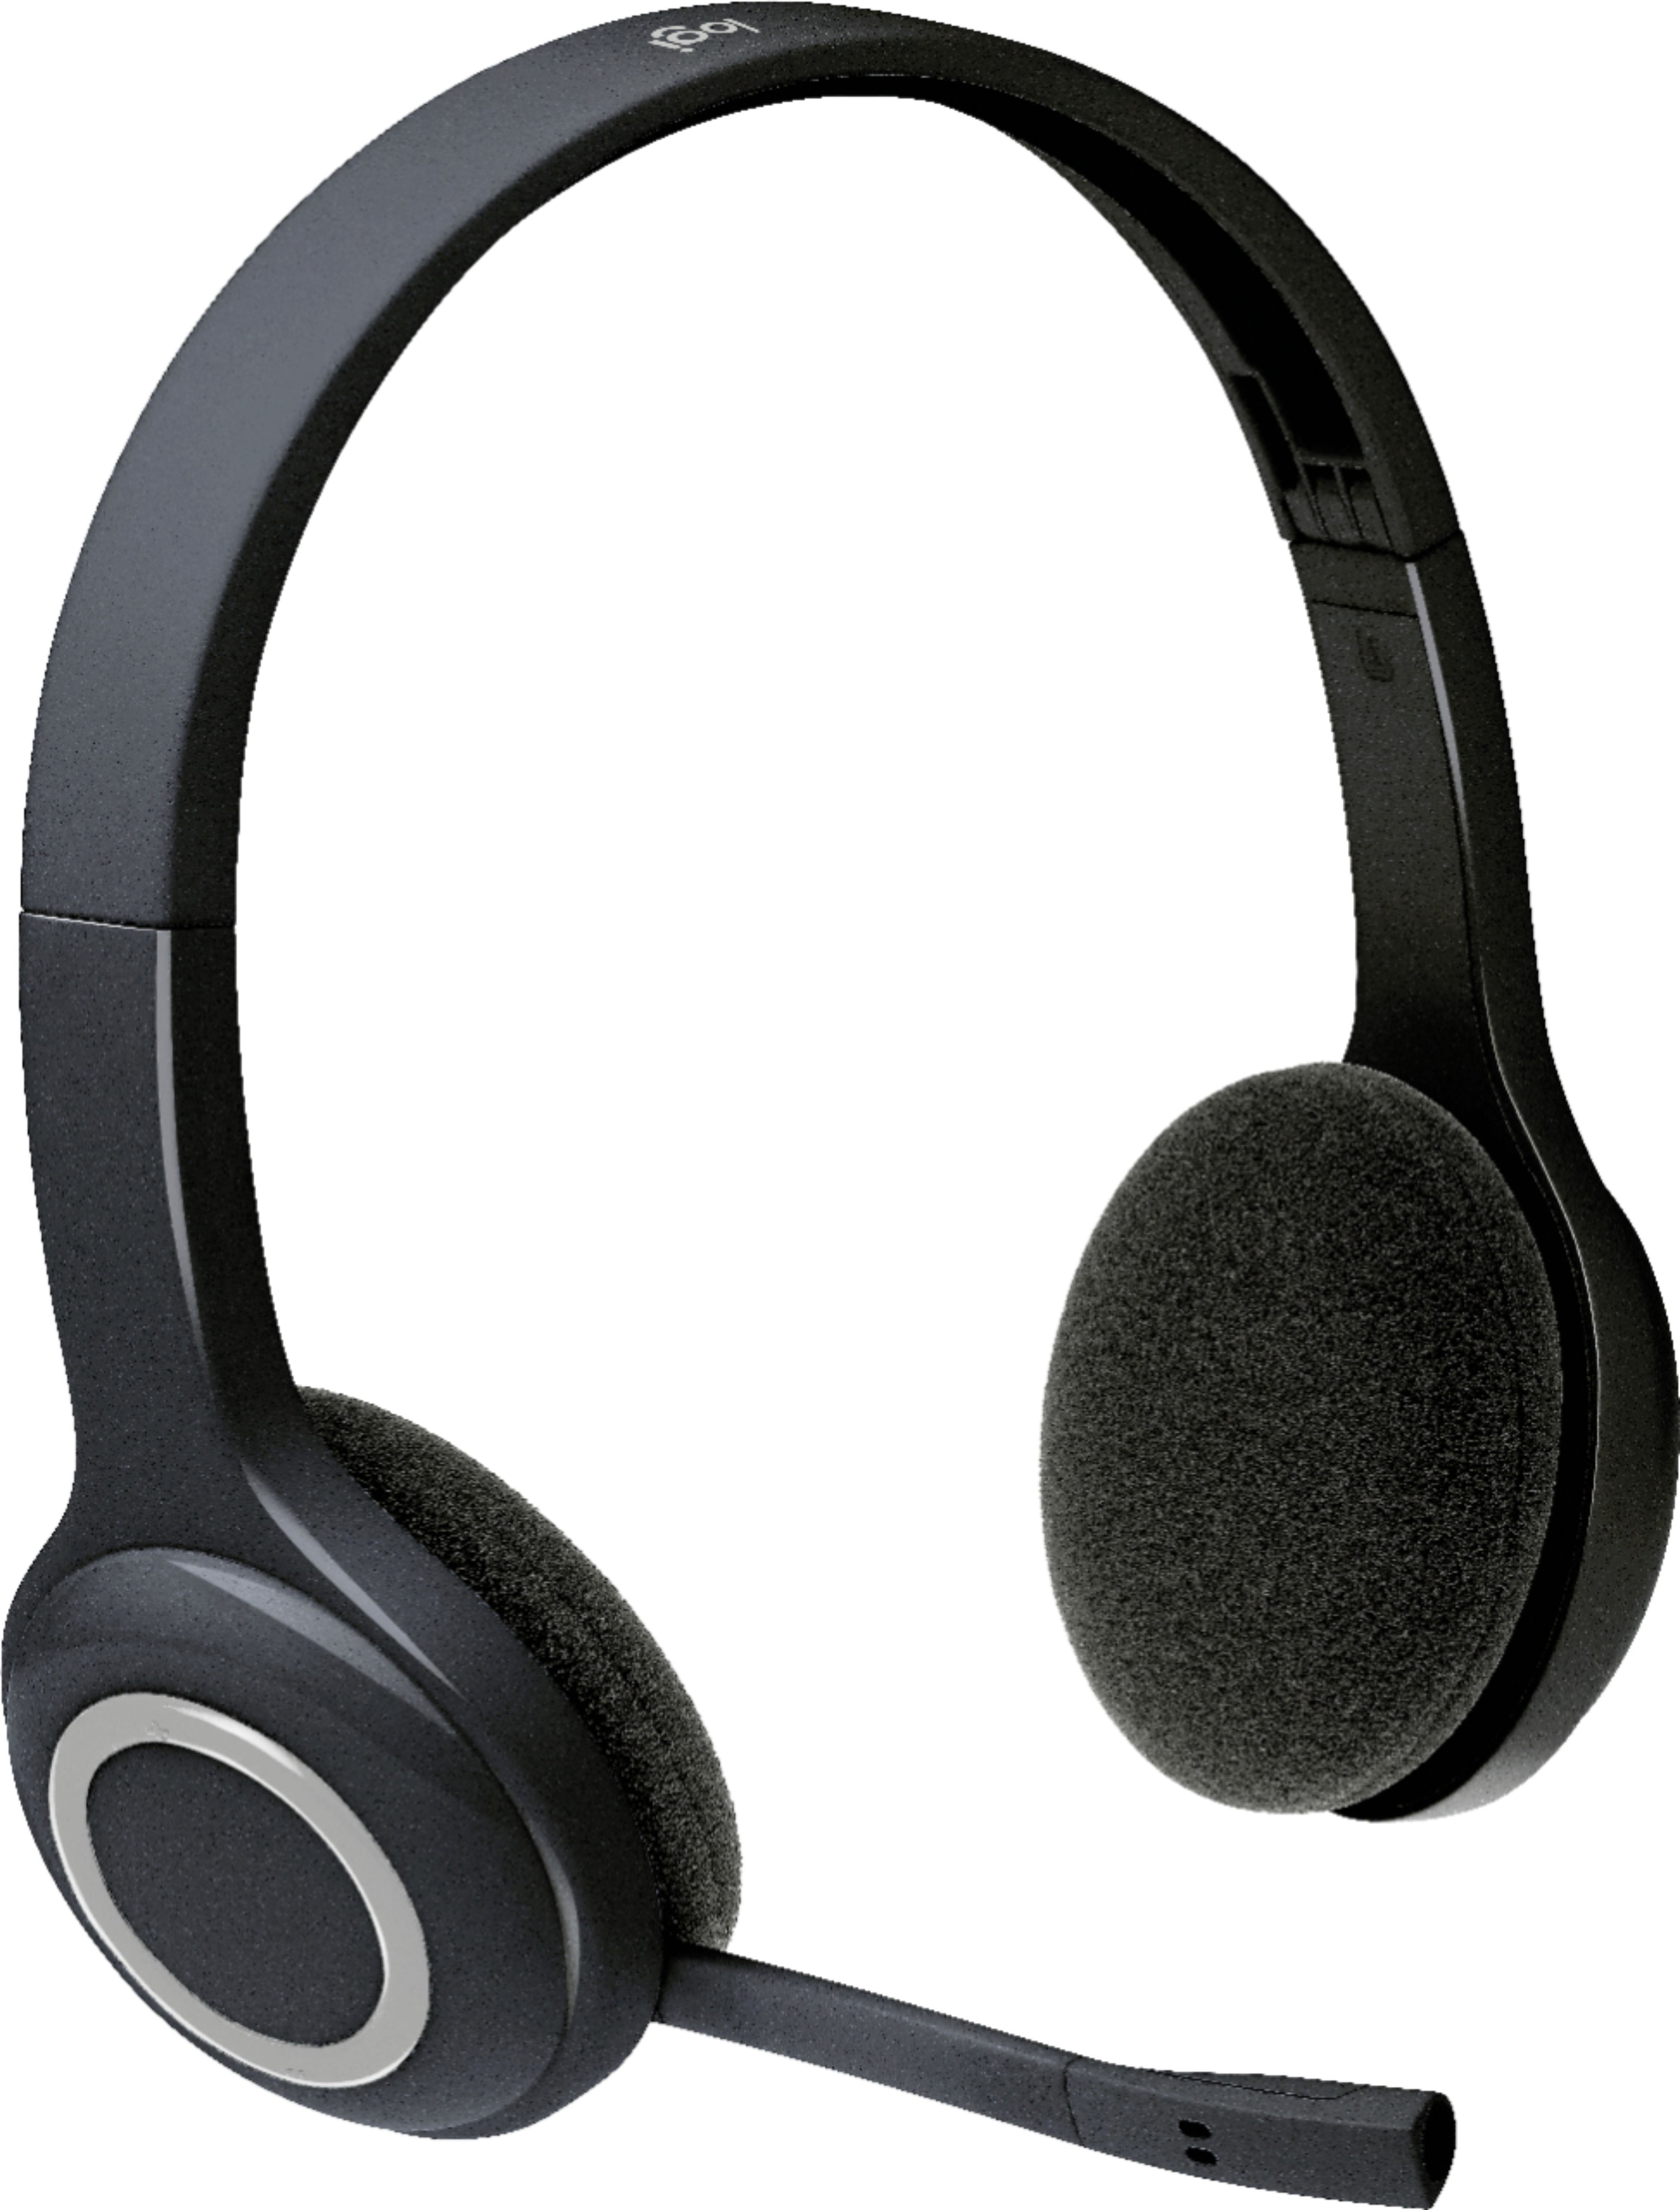 Angle View: Logitech - H800 RF Wireless On-Ear Headset - Black